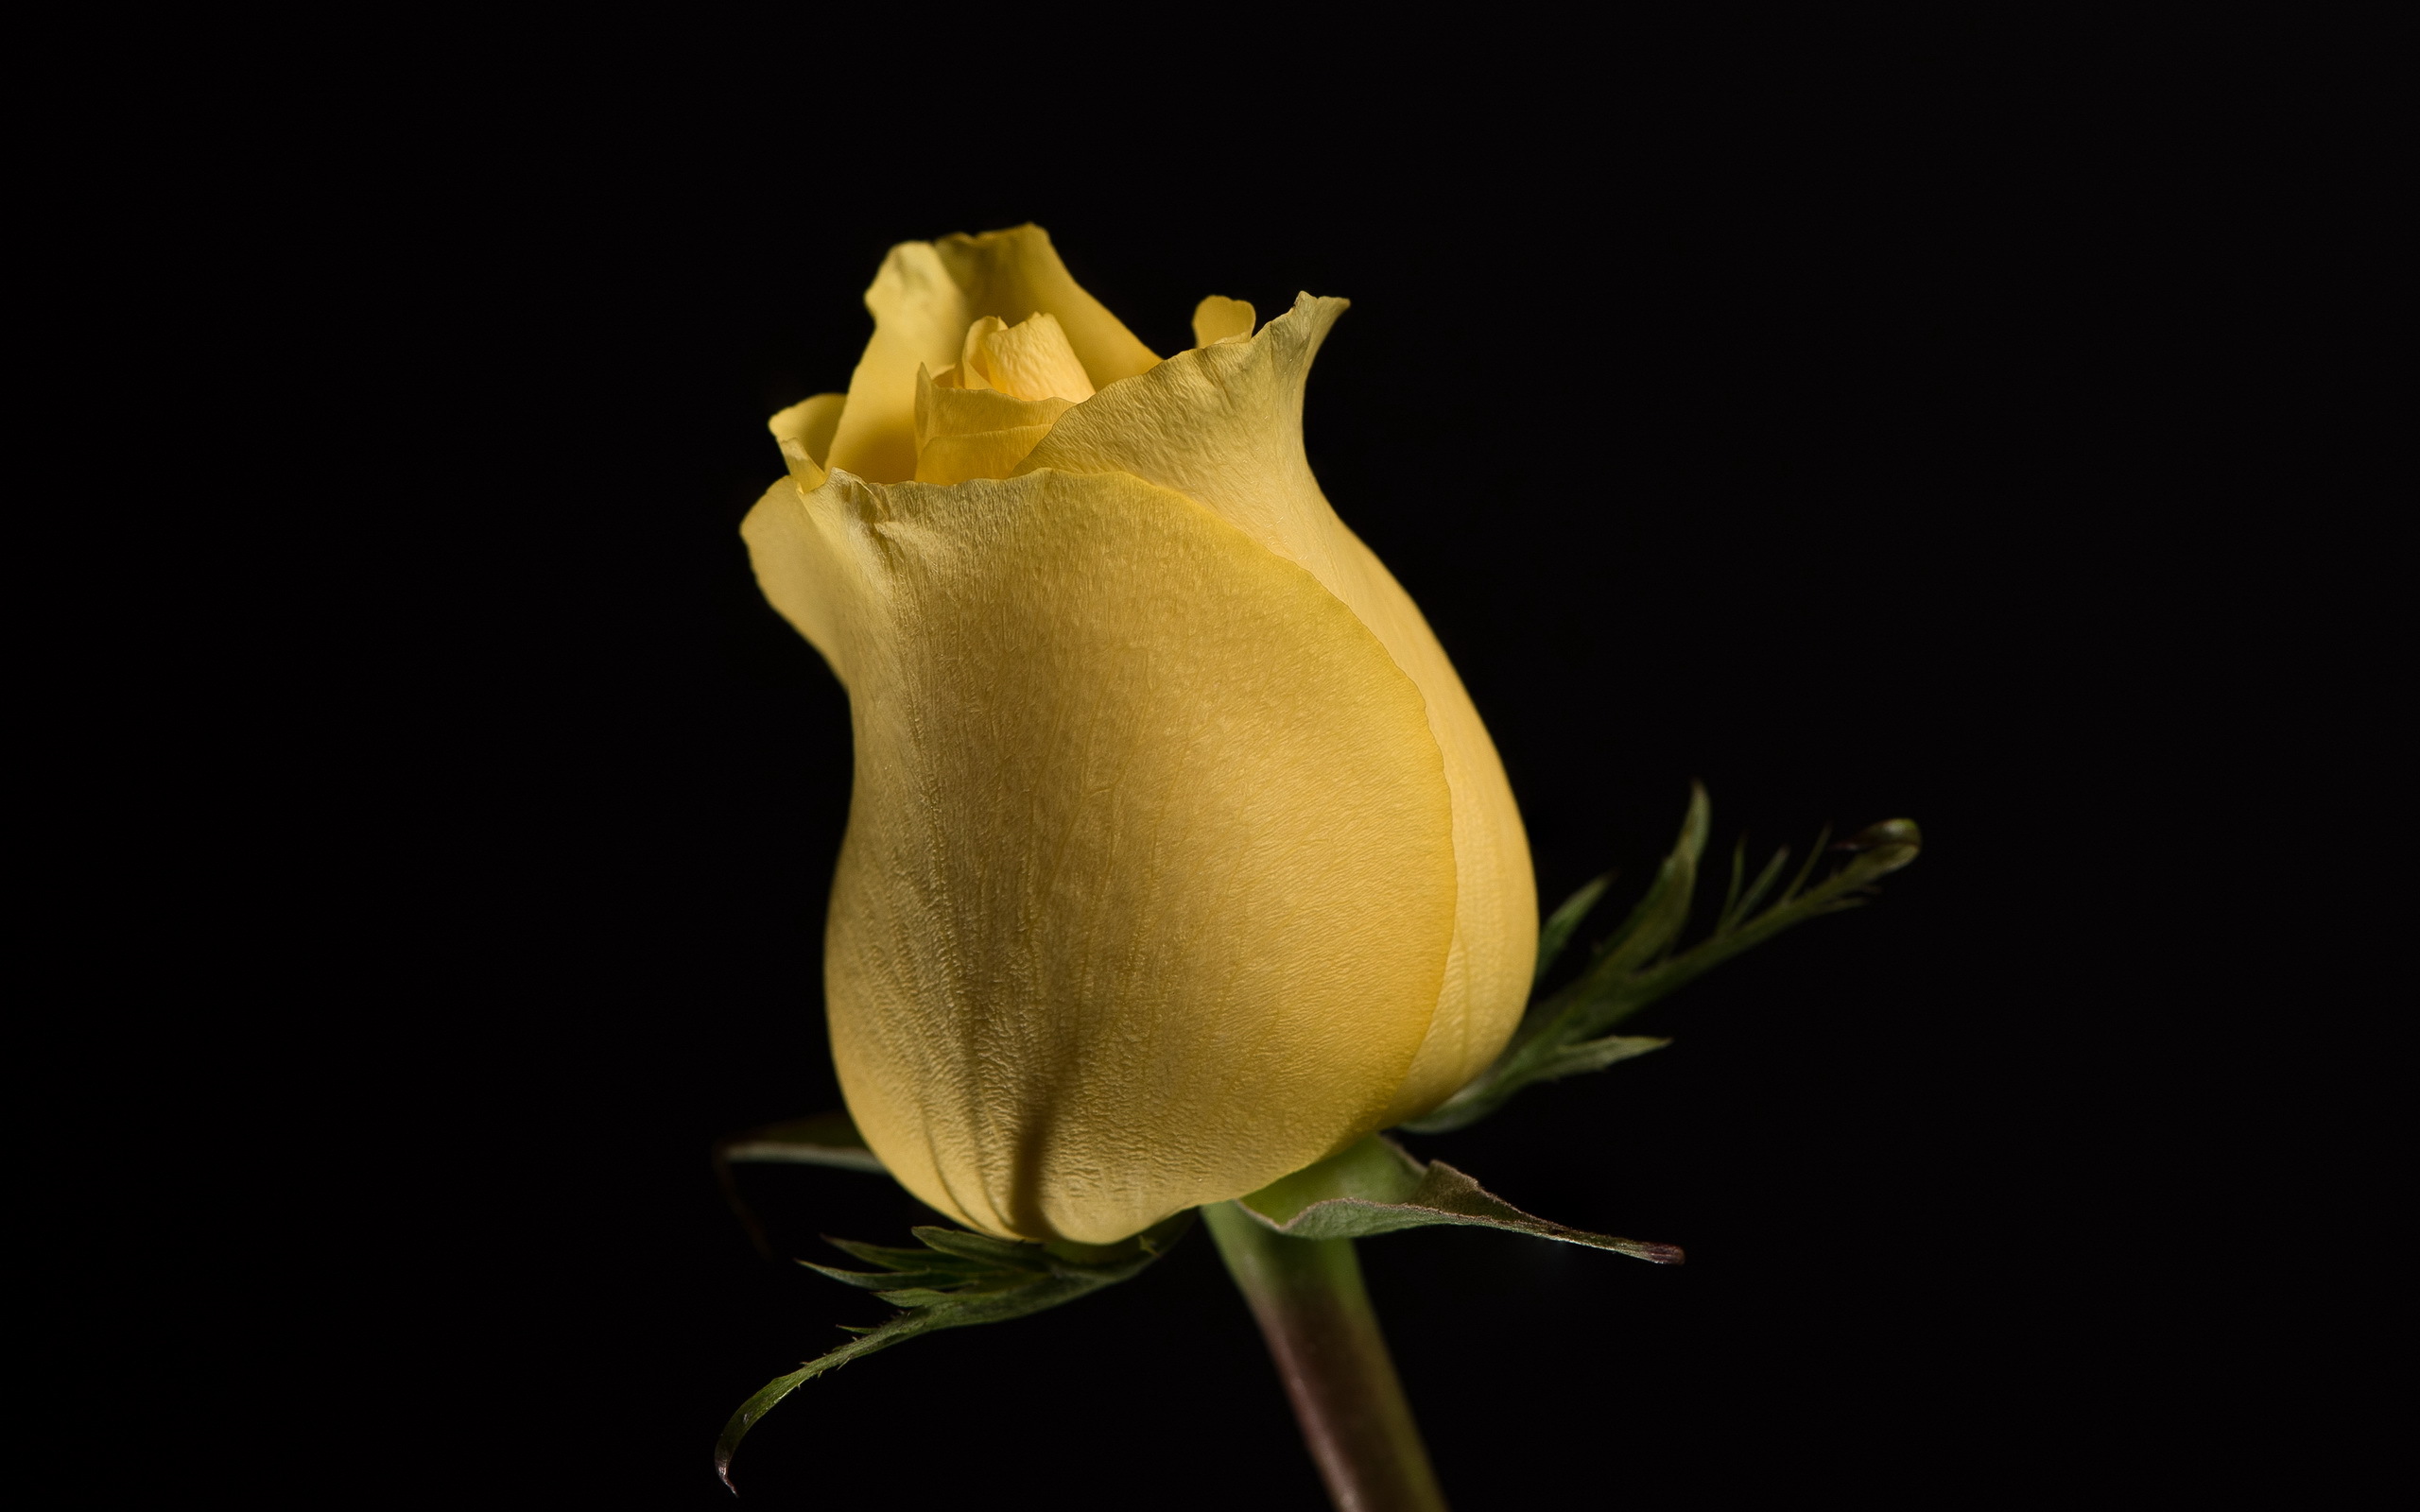 Желтая роза бутон